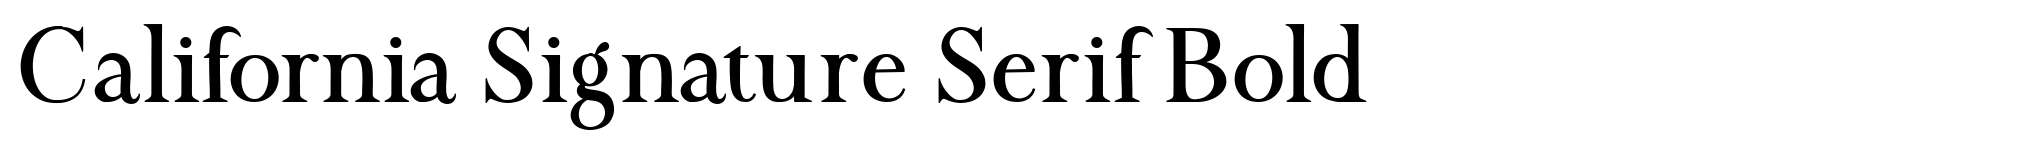 California Signature Serif Bold image